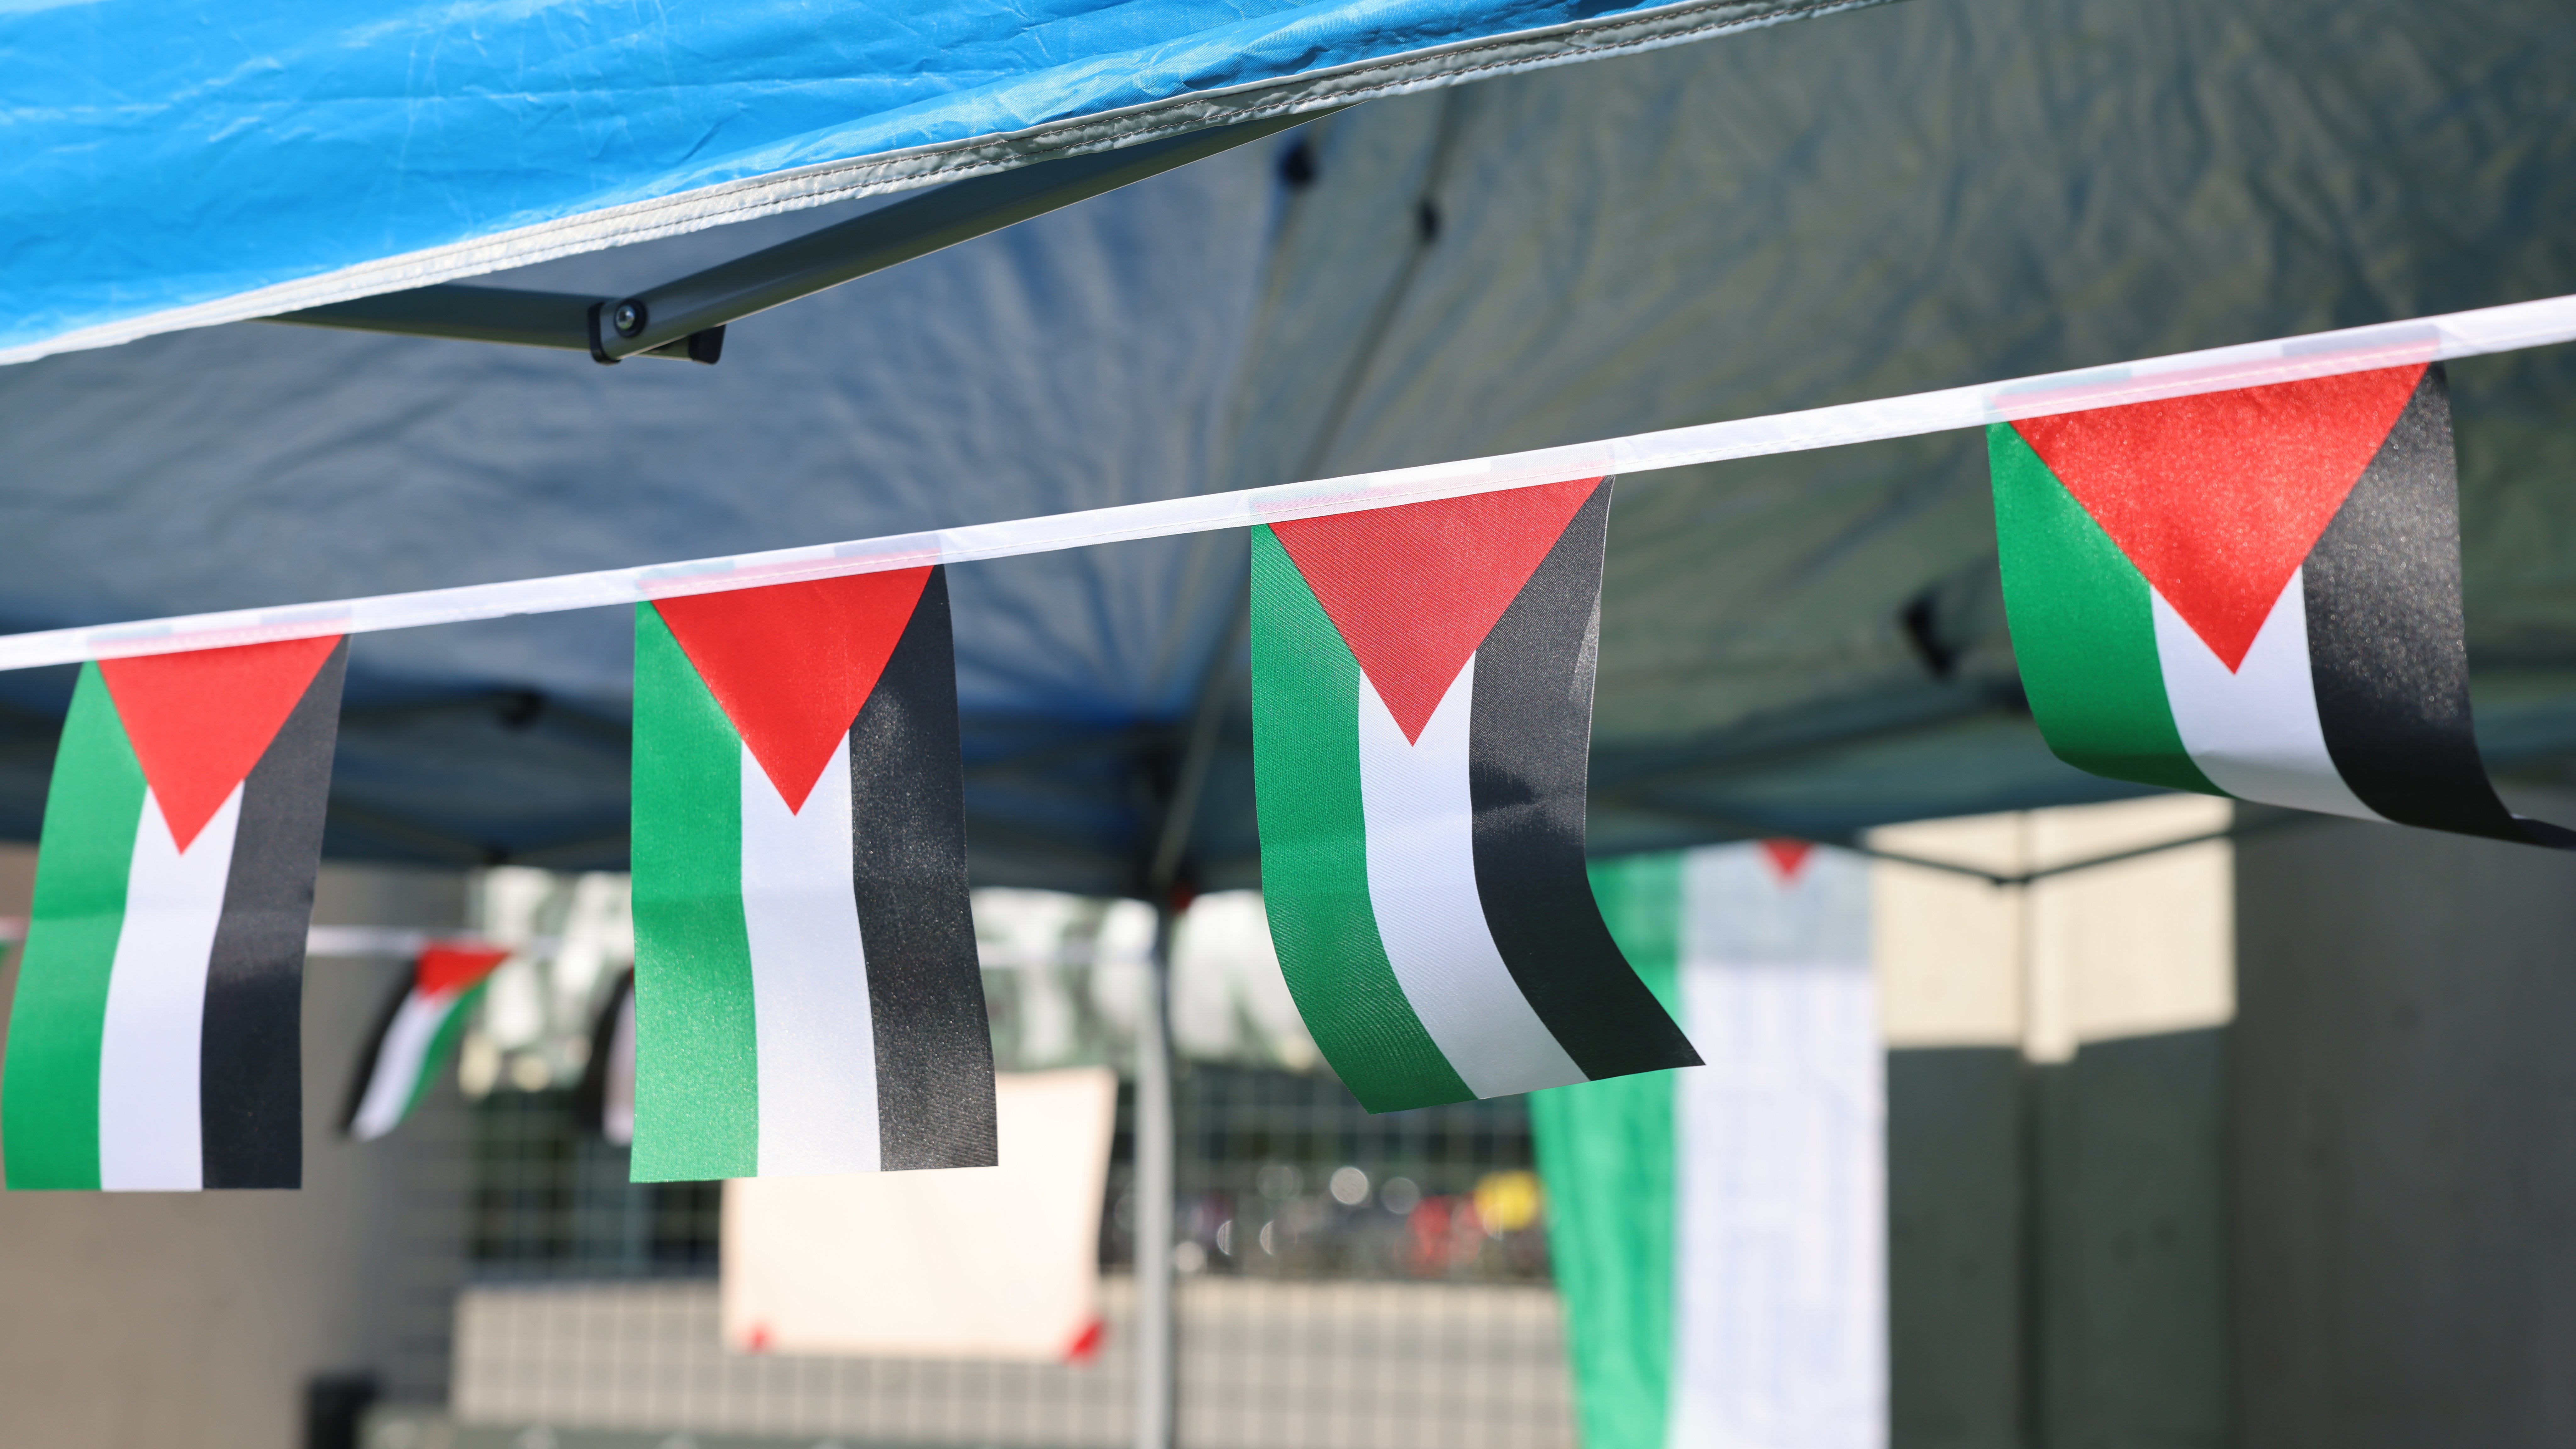 A Palestinian flag garland.